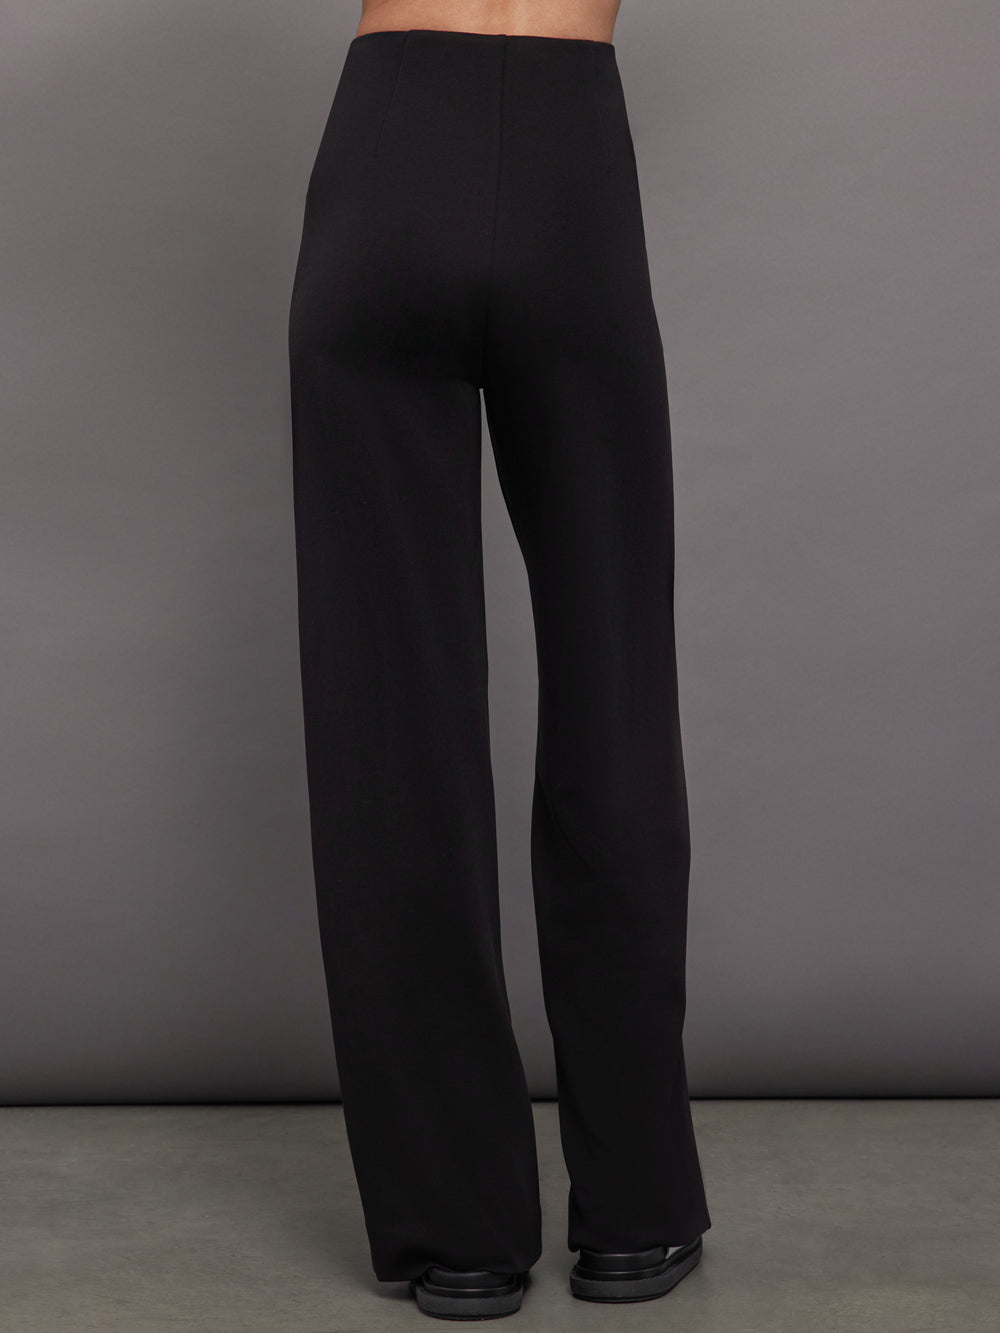 CARBON38 Activewear Pants Womens Small Black Hologram dot High